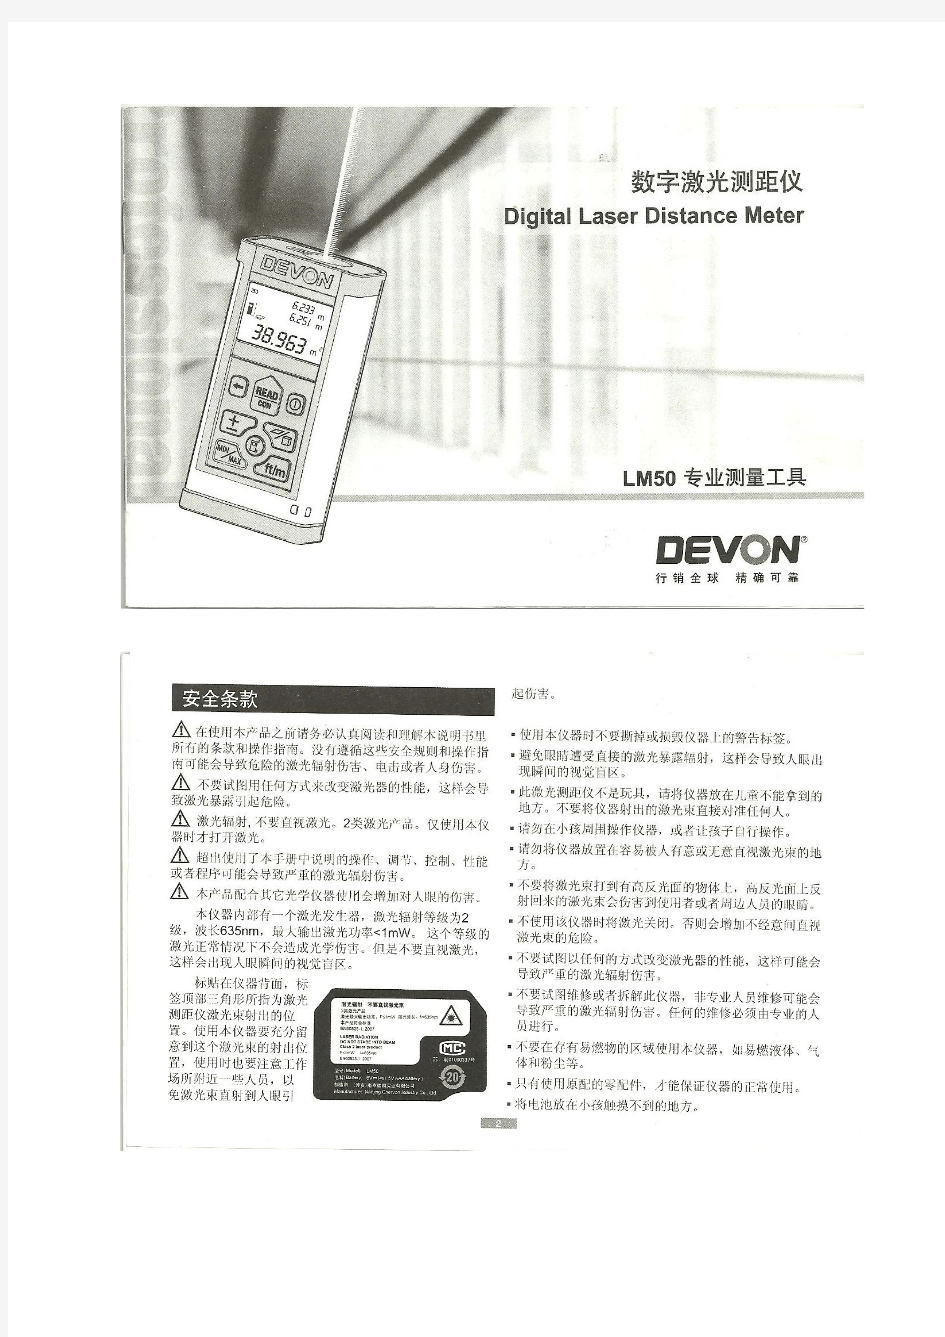 DEVON LM50激光测距仪使用说明